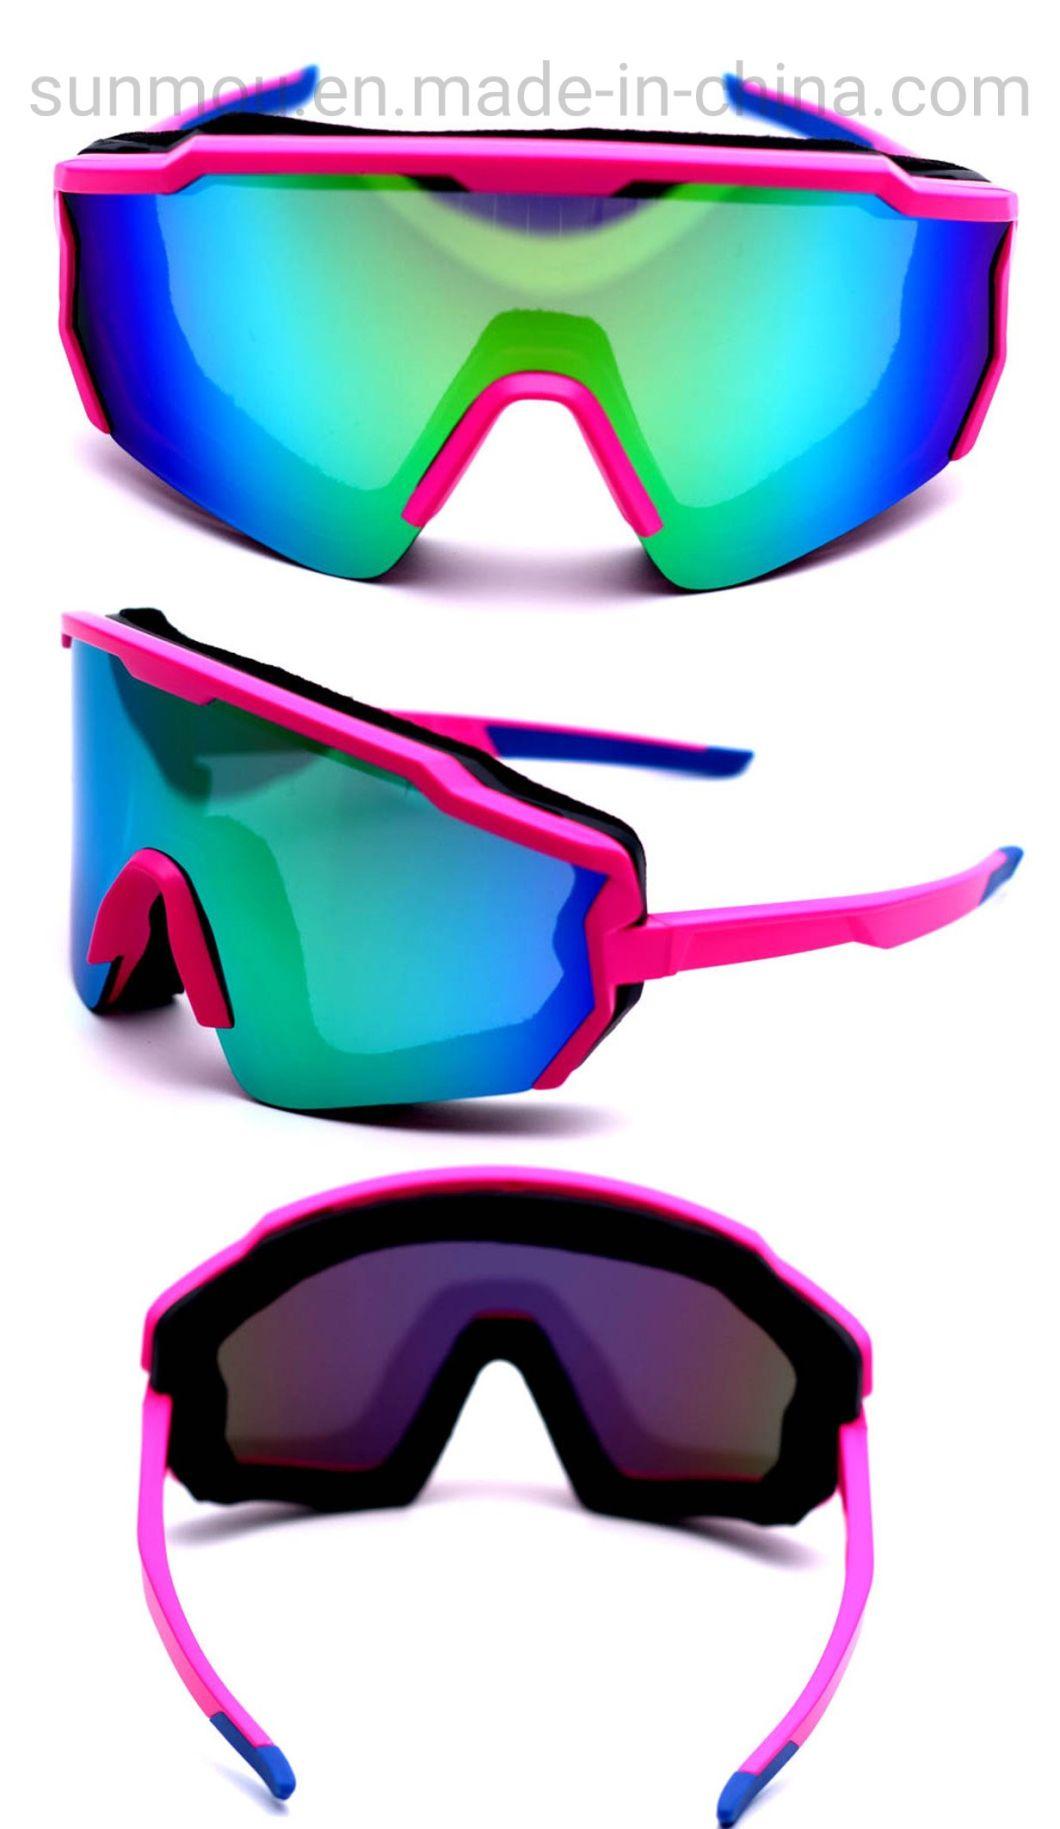 SA0833A02 100% UV Protection Polycarbonate PC Lens Eyewear Sunglasses Eye Glasses High Quality Popular Walking Protective Glasses Mask for Men Women Unisex